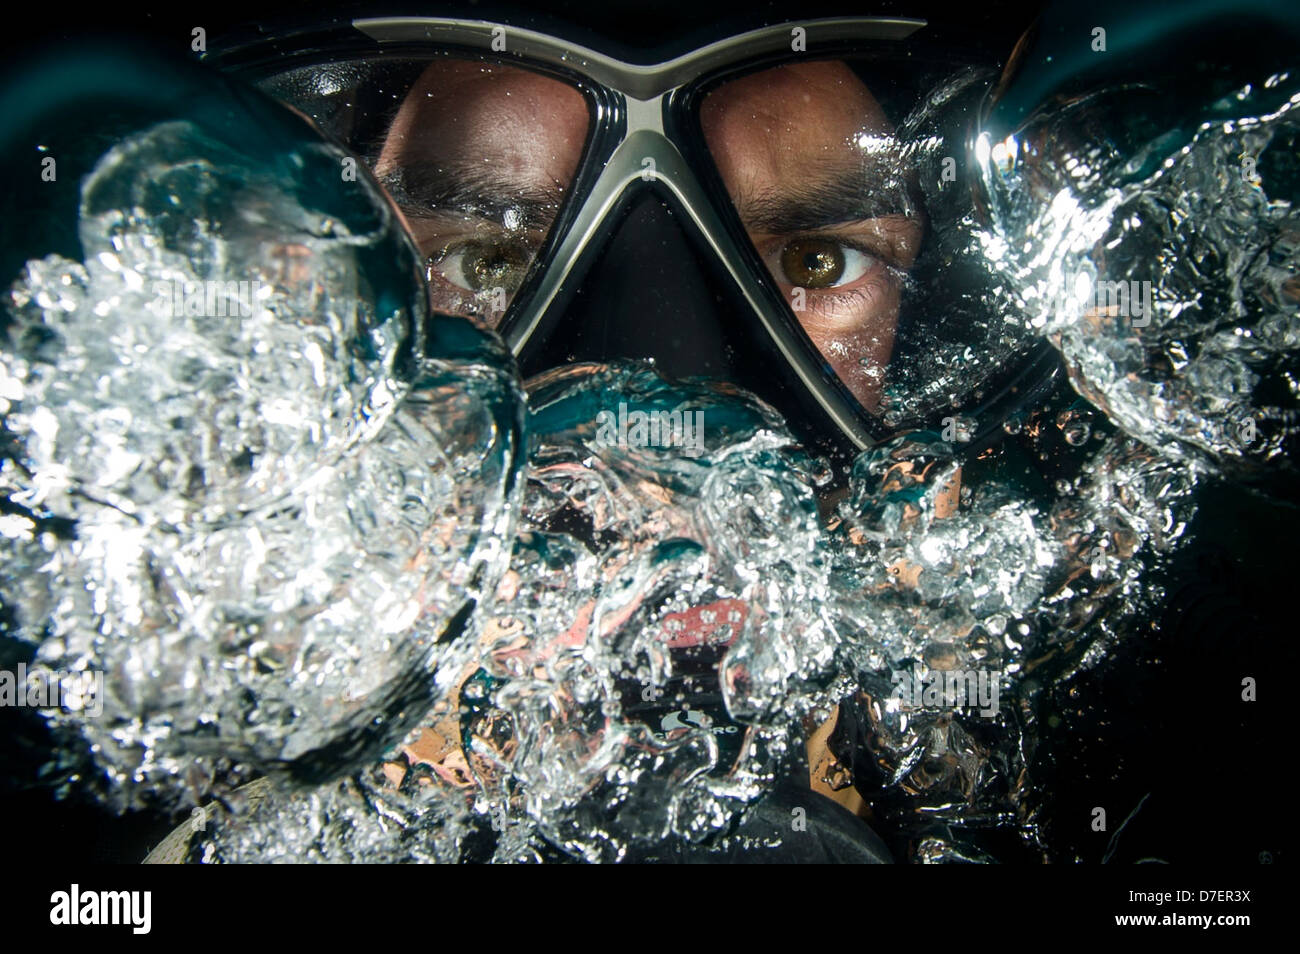 Combat Camera conducts underwater photography training. Stock Photo